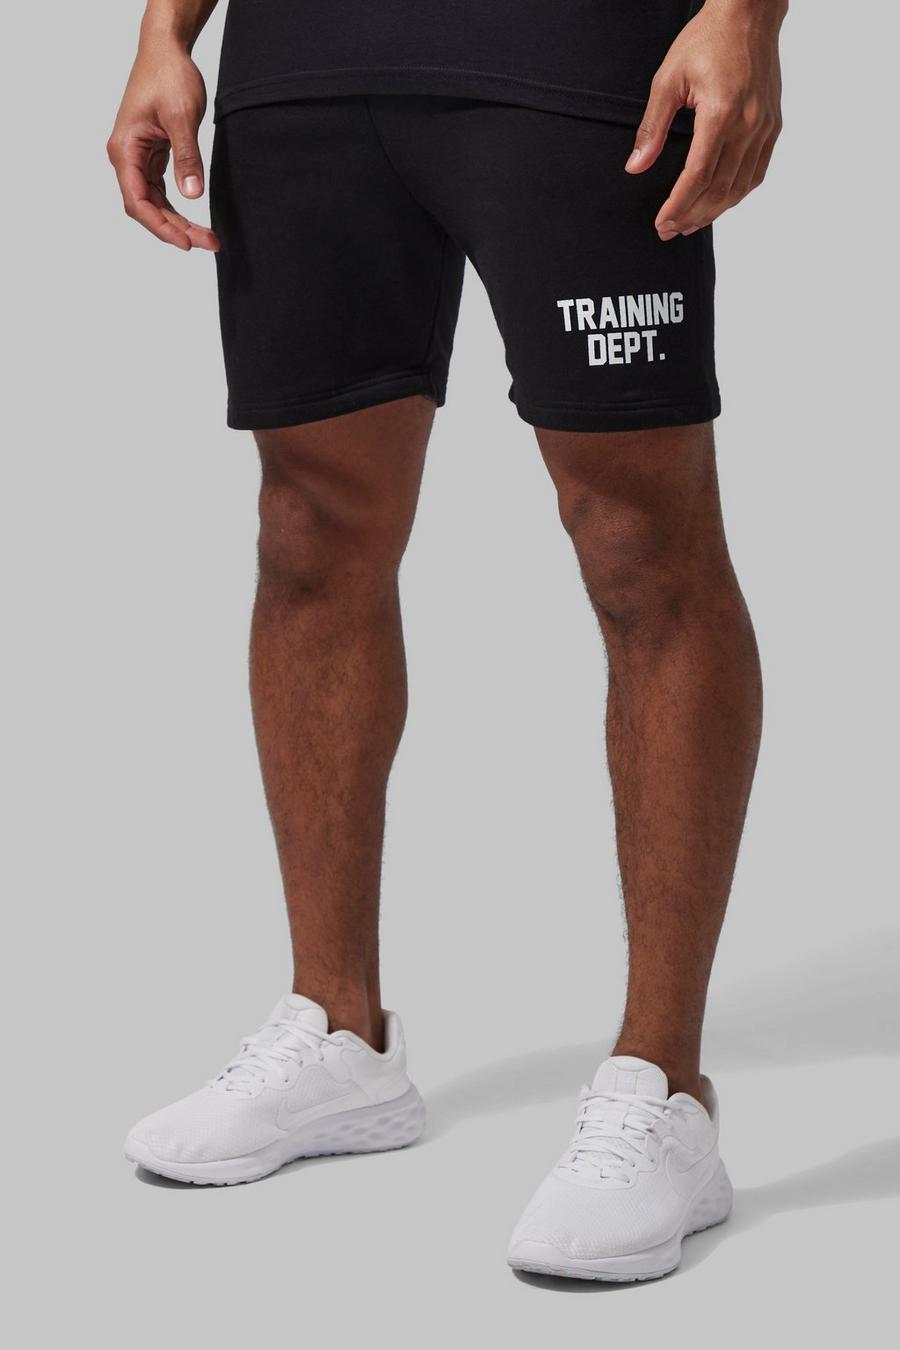 Black Tall Man Active Training Dept Shorts  